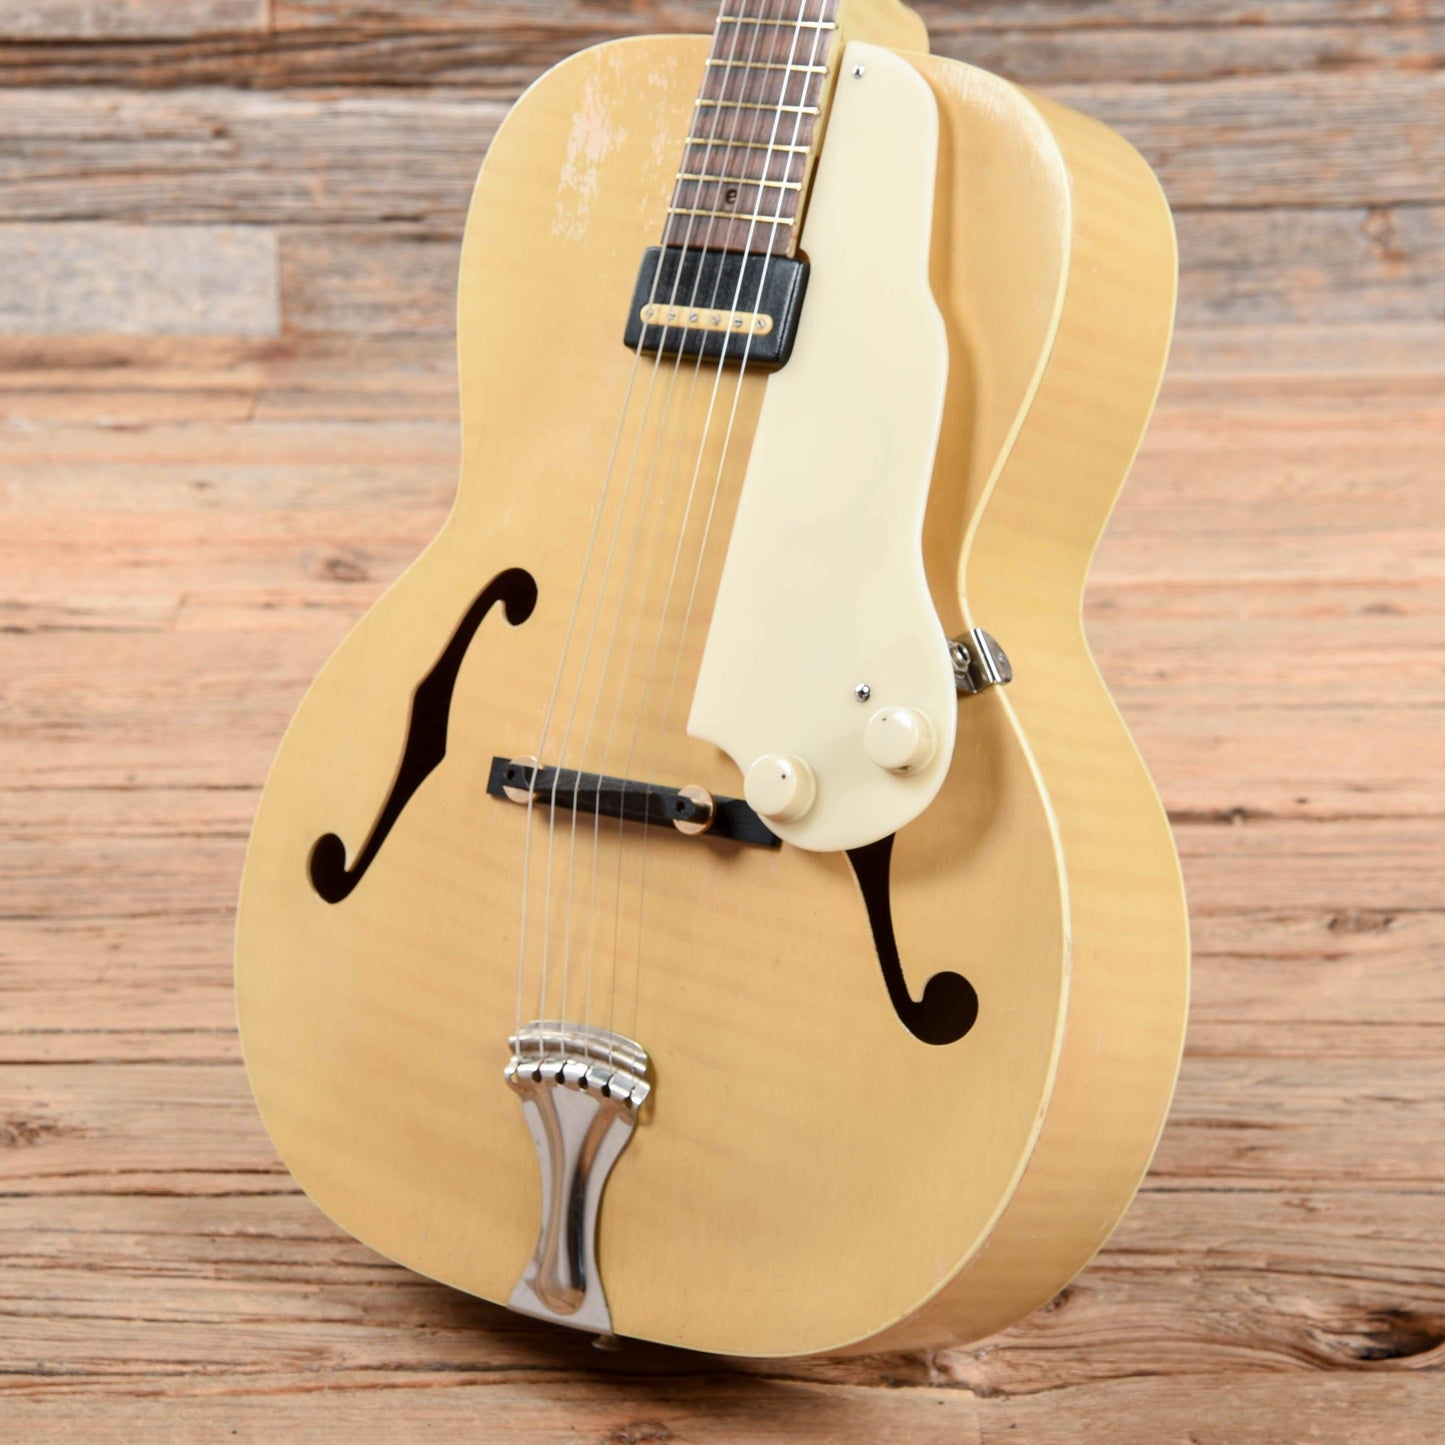 Supro El Capitan Blonde 1950s Electric Guitars / Hollow Body